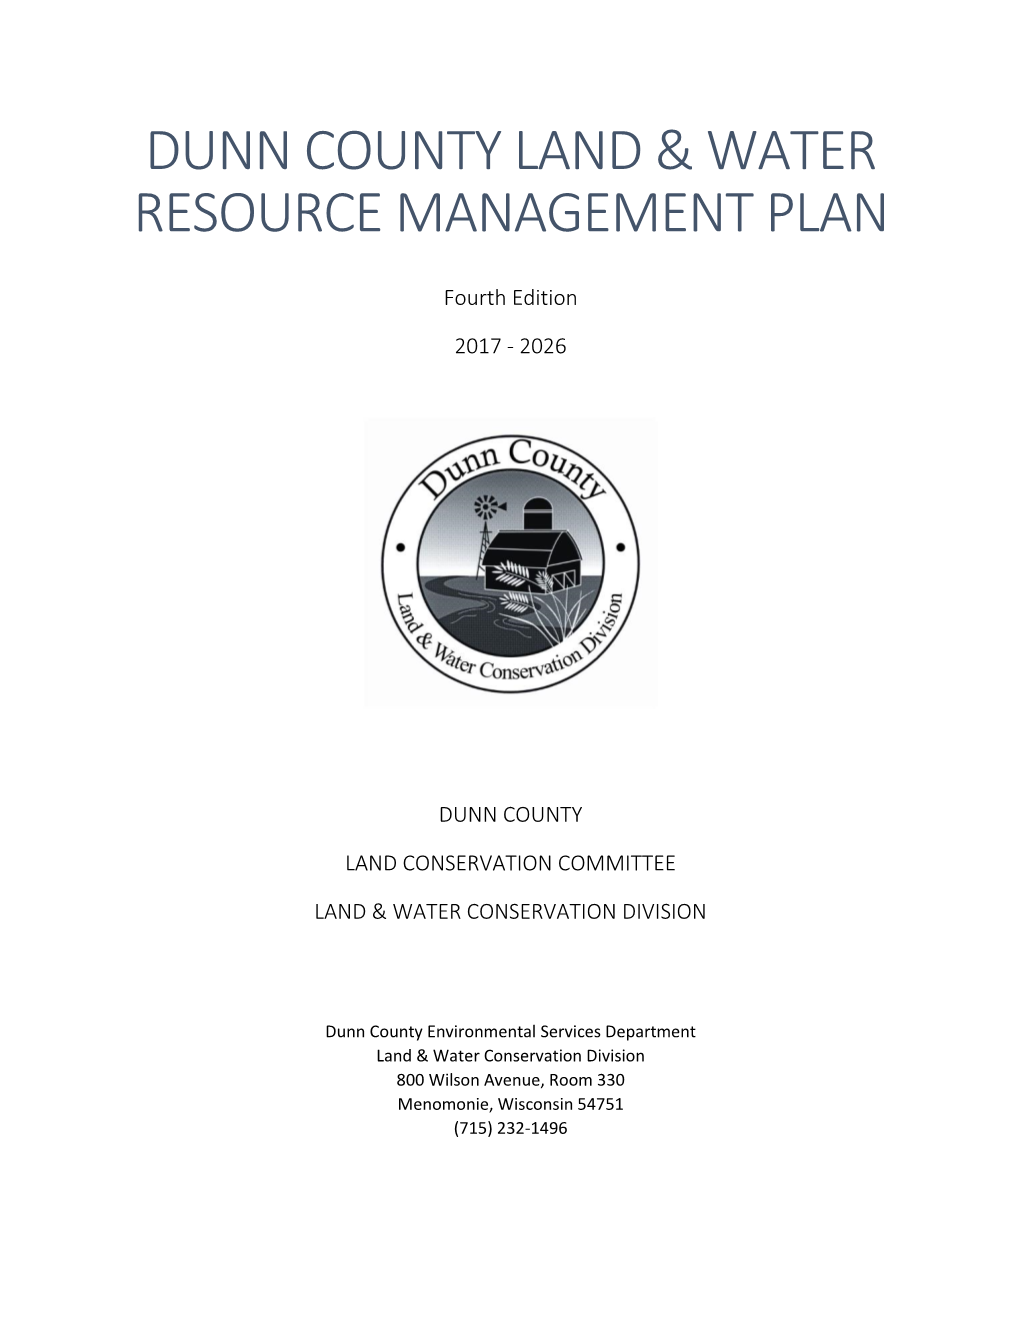 Land & Water Resource Management Plan (2017-2026)